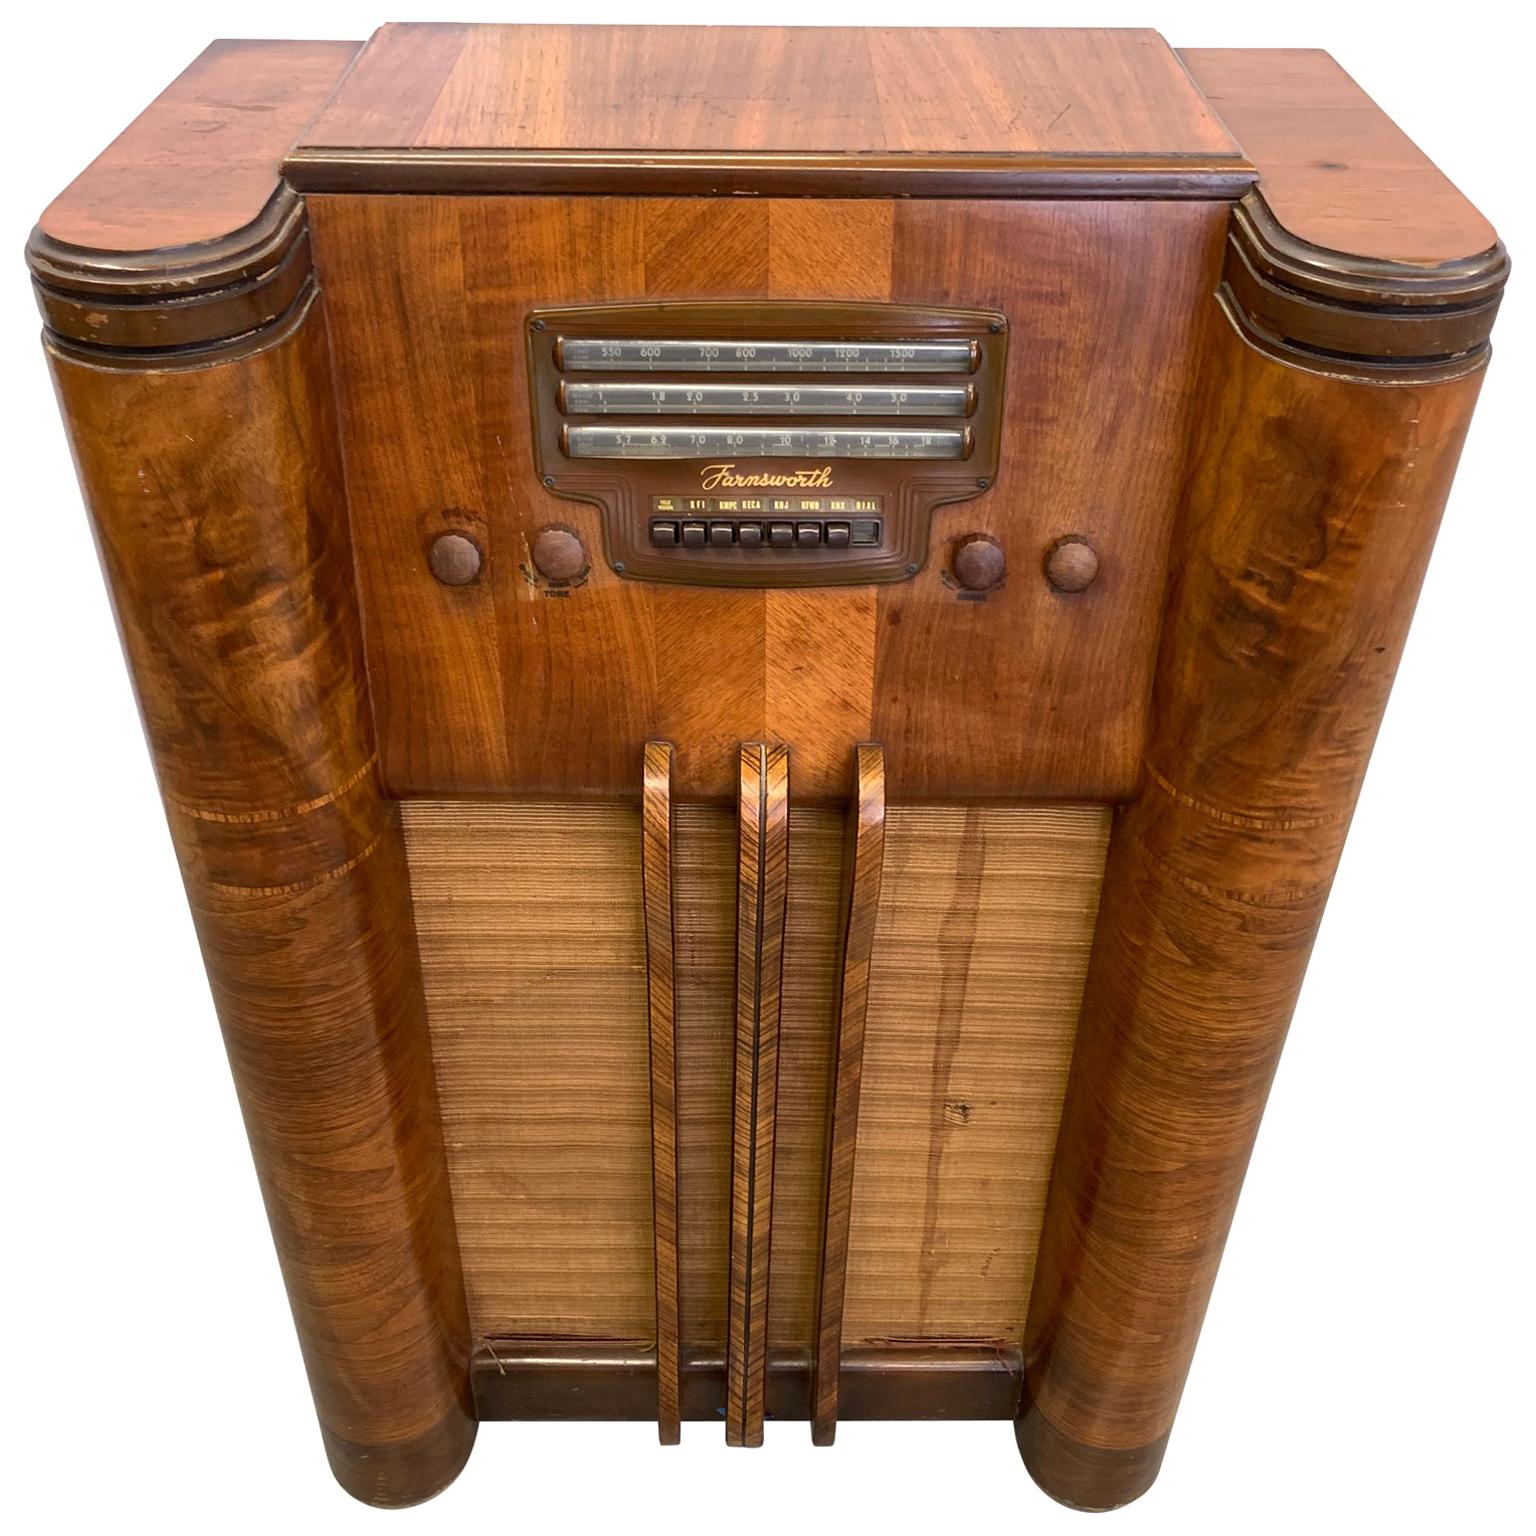 Vintage Floor Radio by Farnsworth Television and Radio Corp at 1stDibs |  farnsworth radio value, farnsworth radio models, antique radios for sale